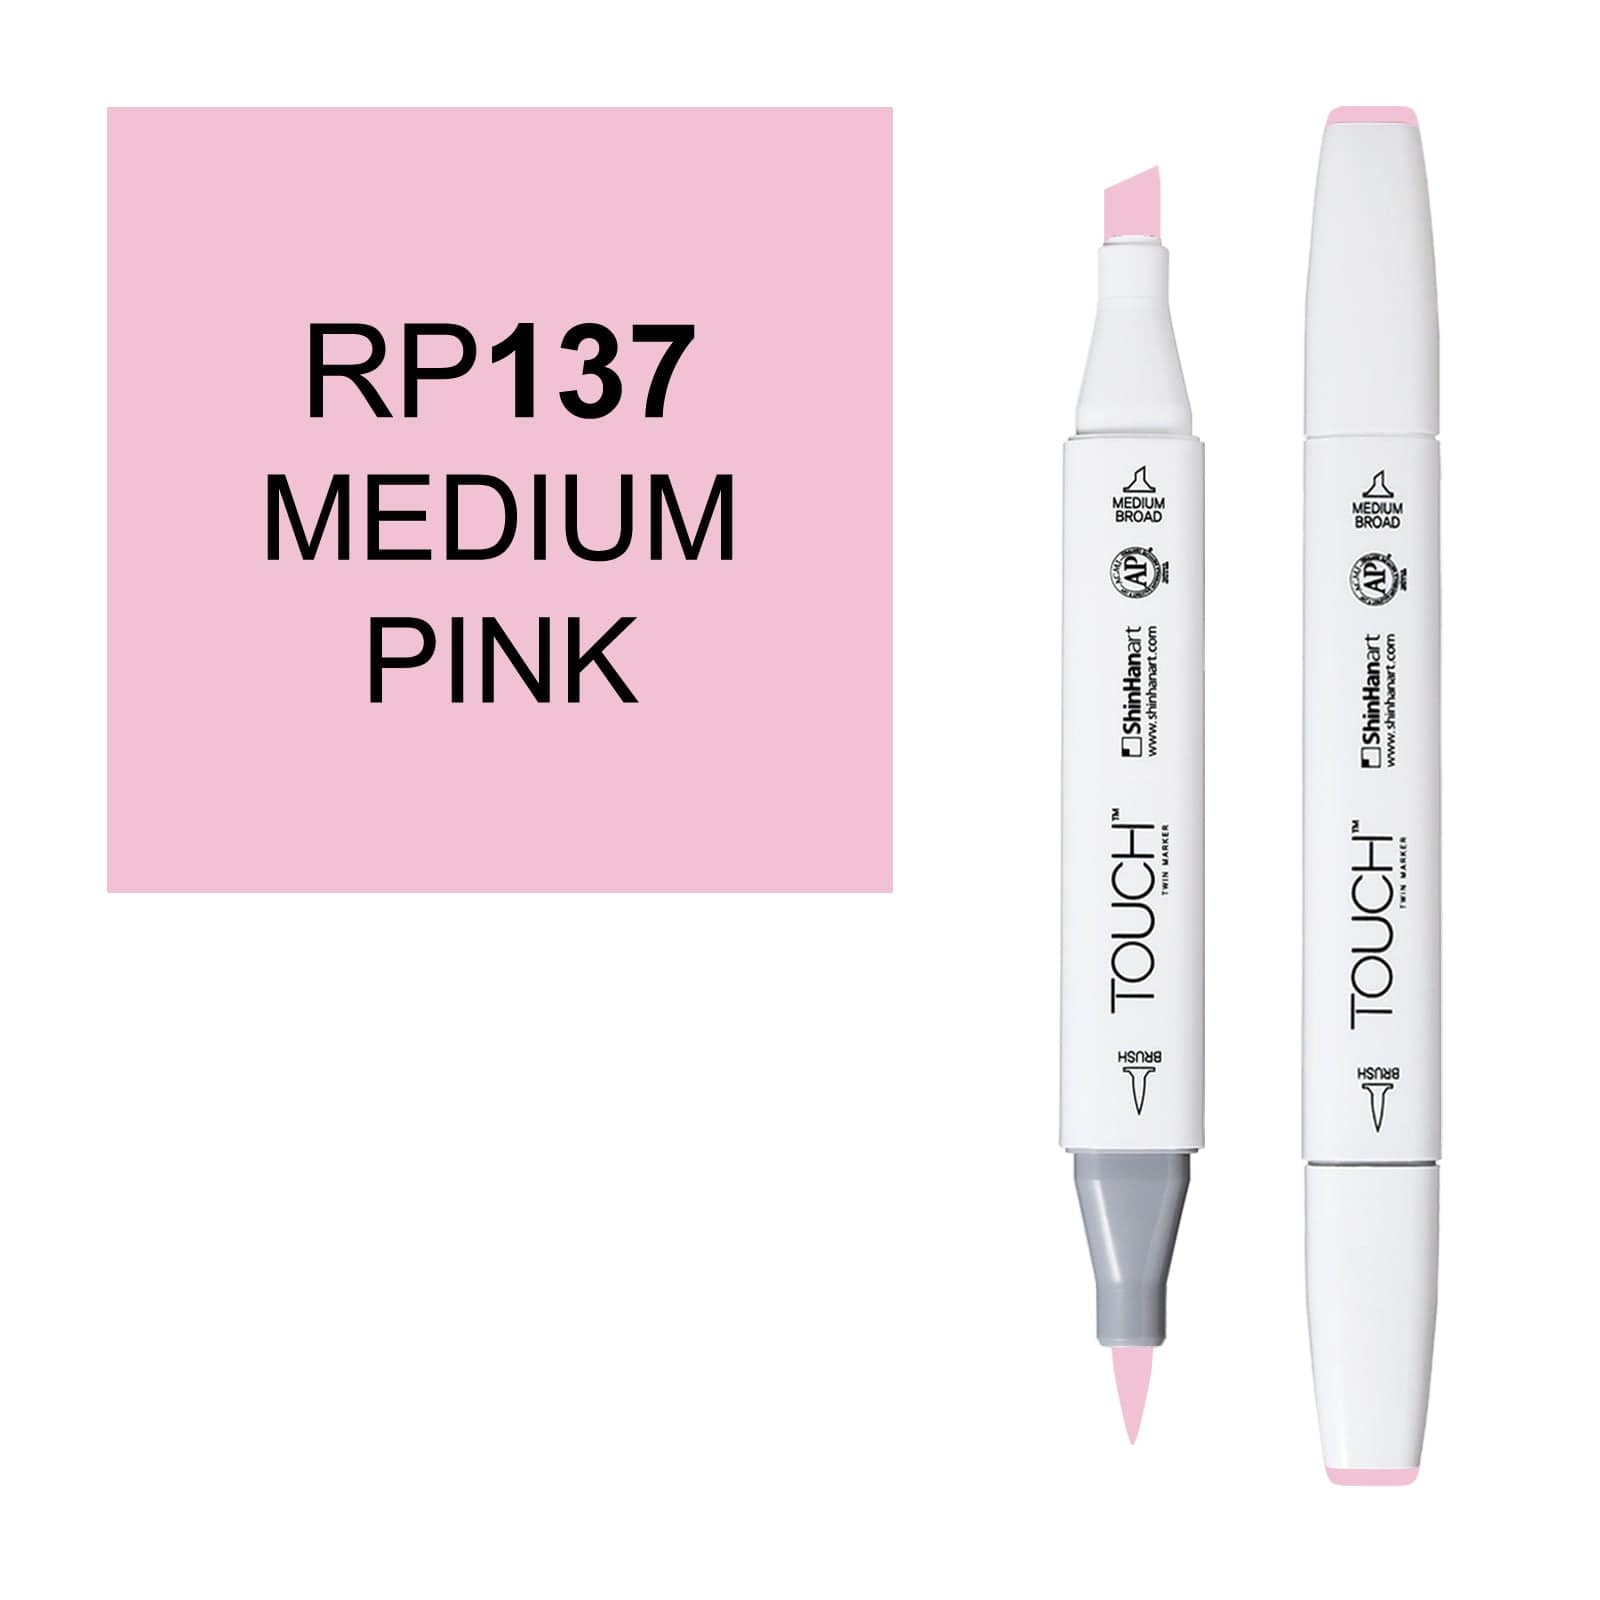 ShinHanart Touch Twin Brush Markers Medium pink